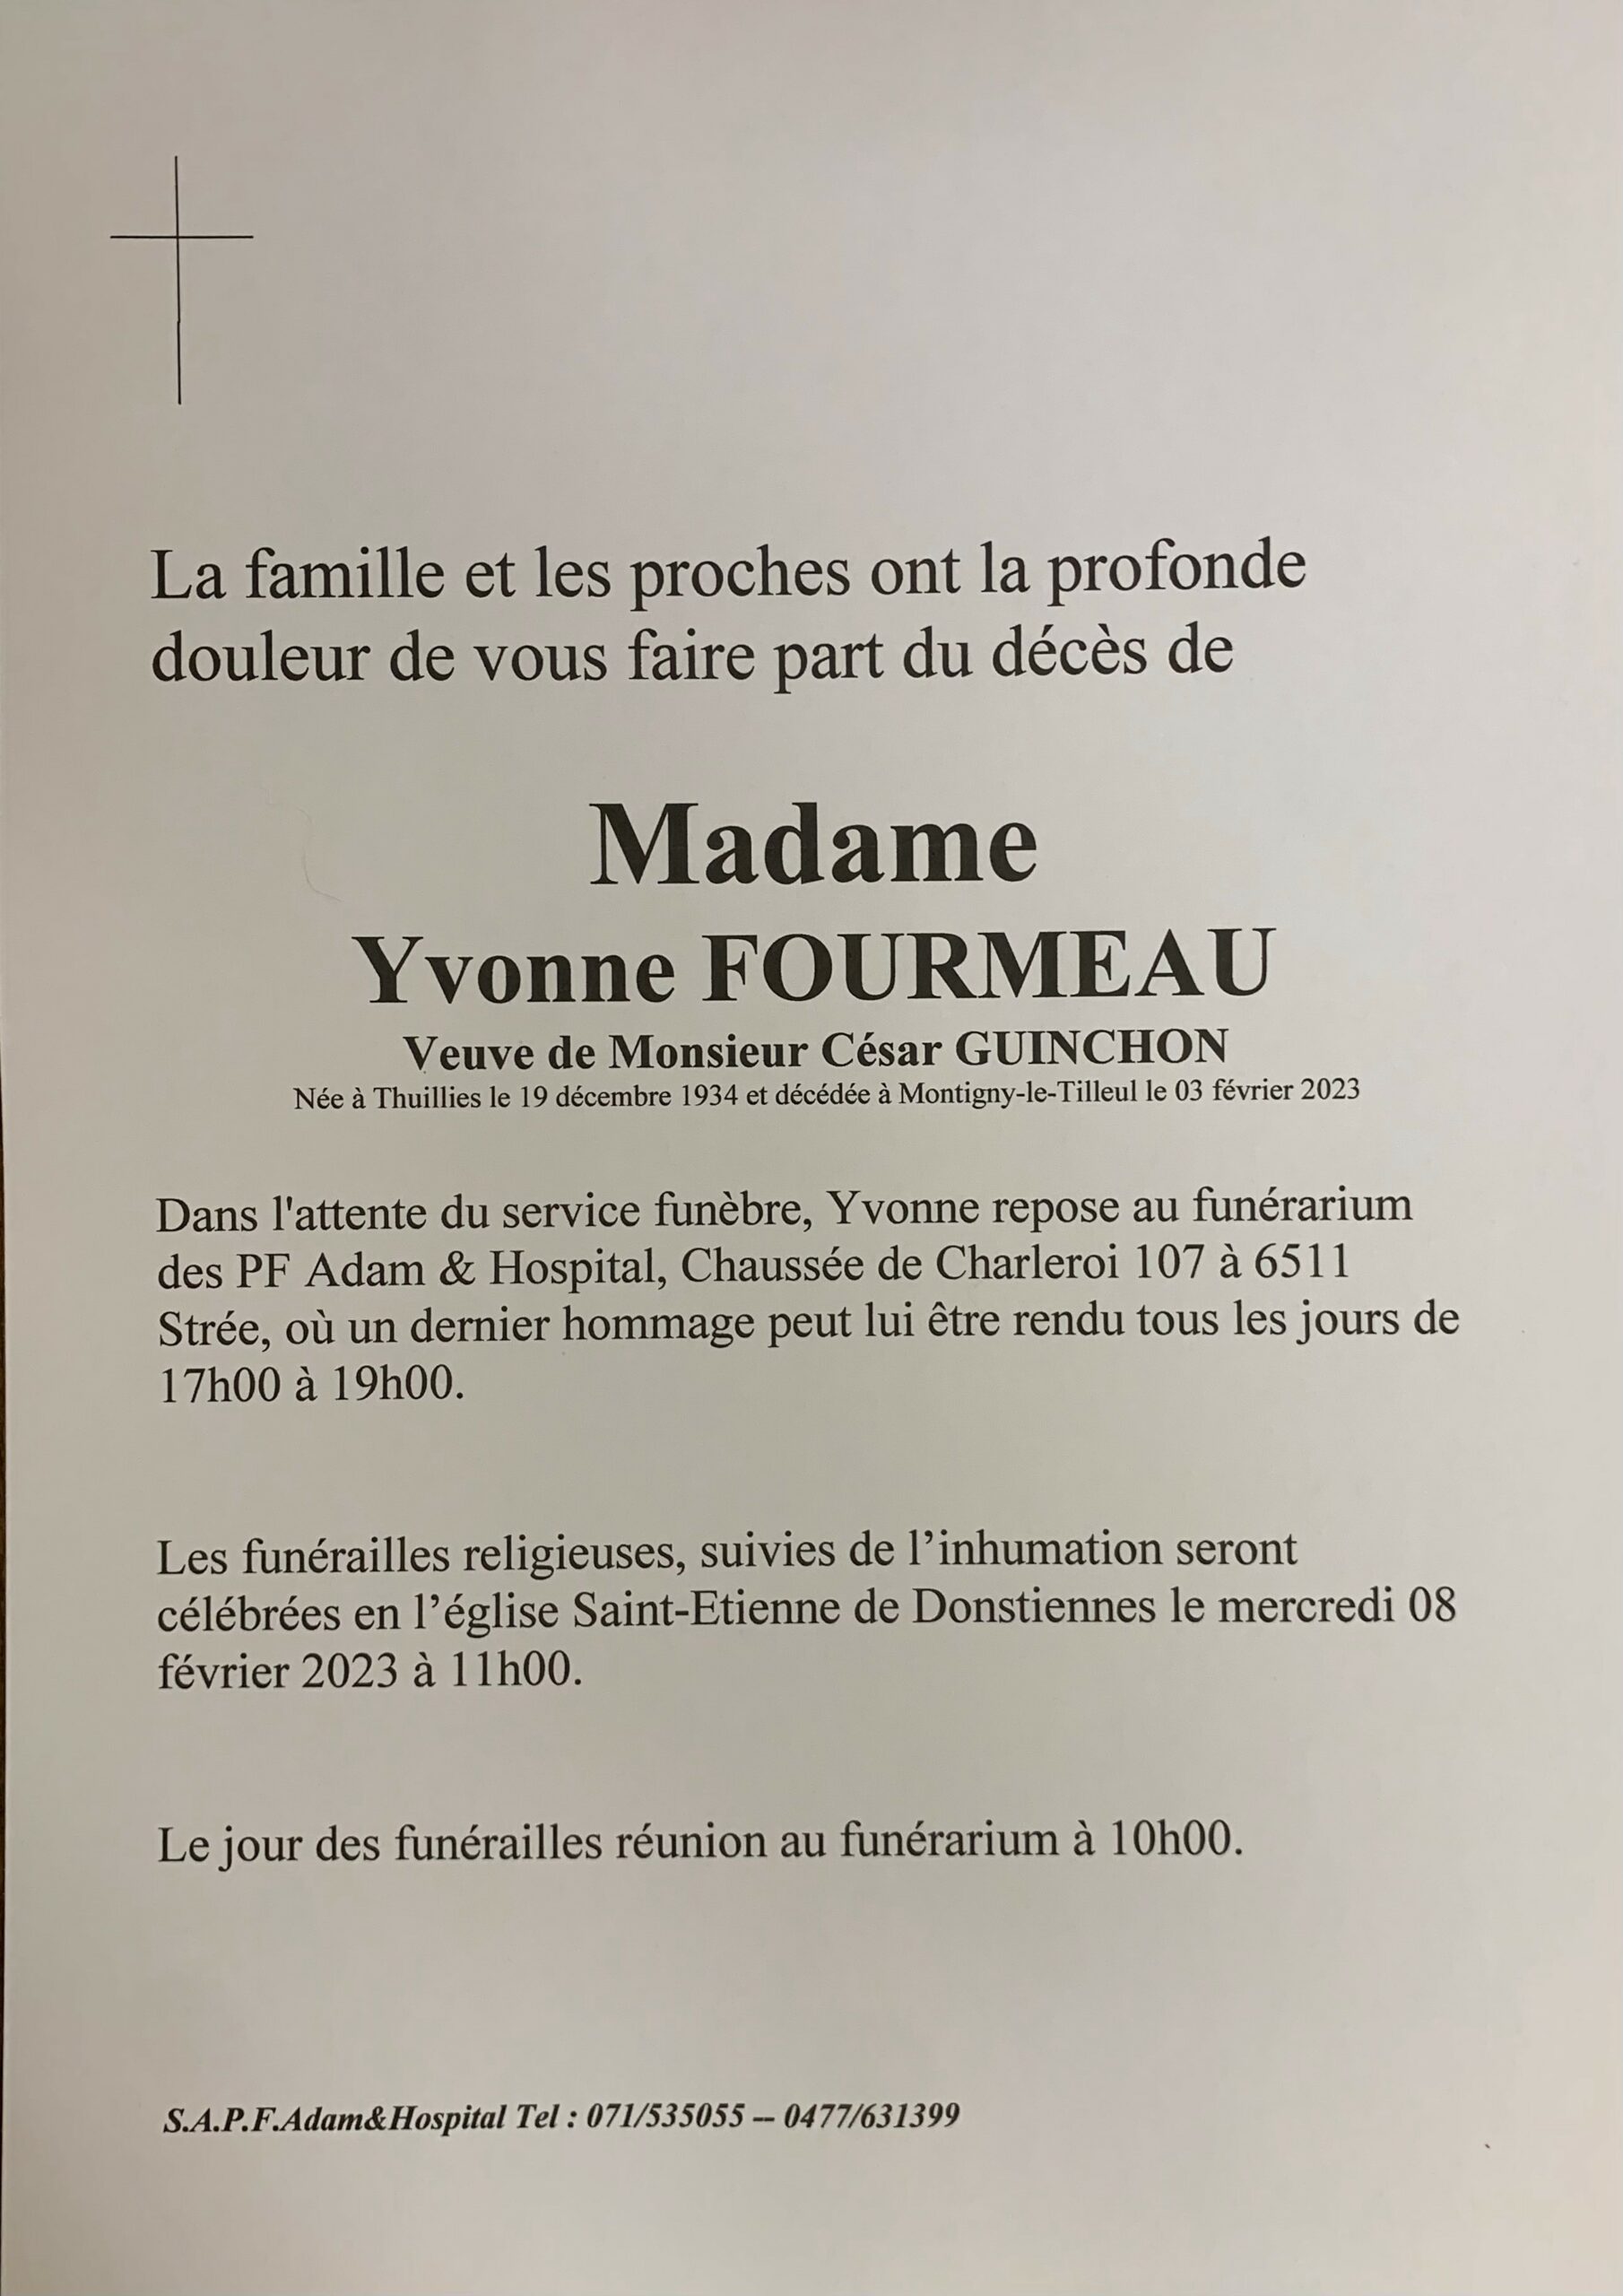 Madame Yvonne FOURMEAU scaled | Funérailles Adam Hospital